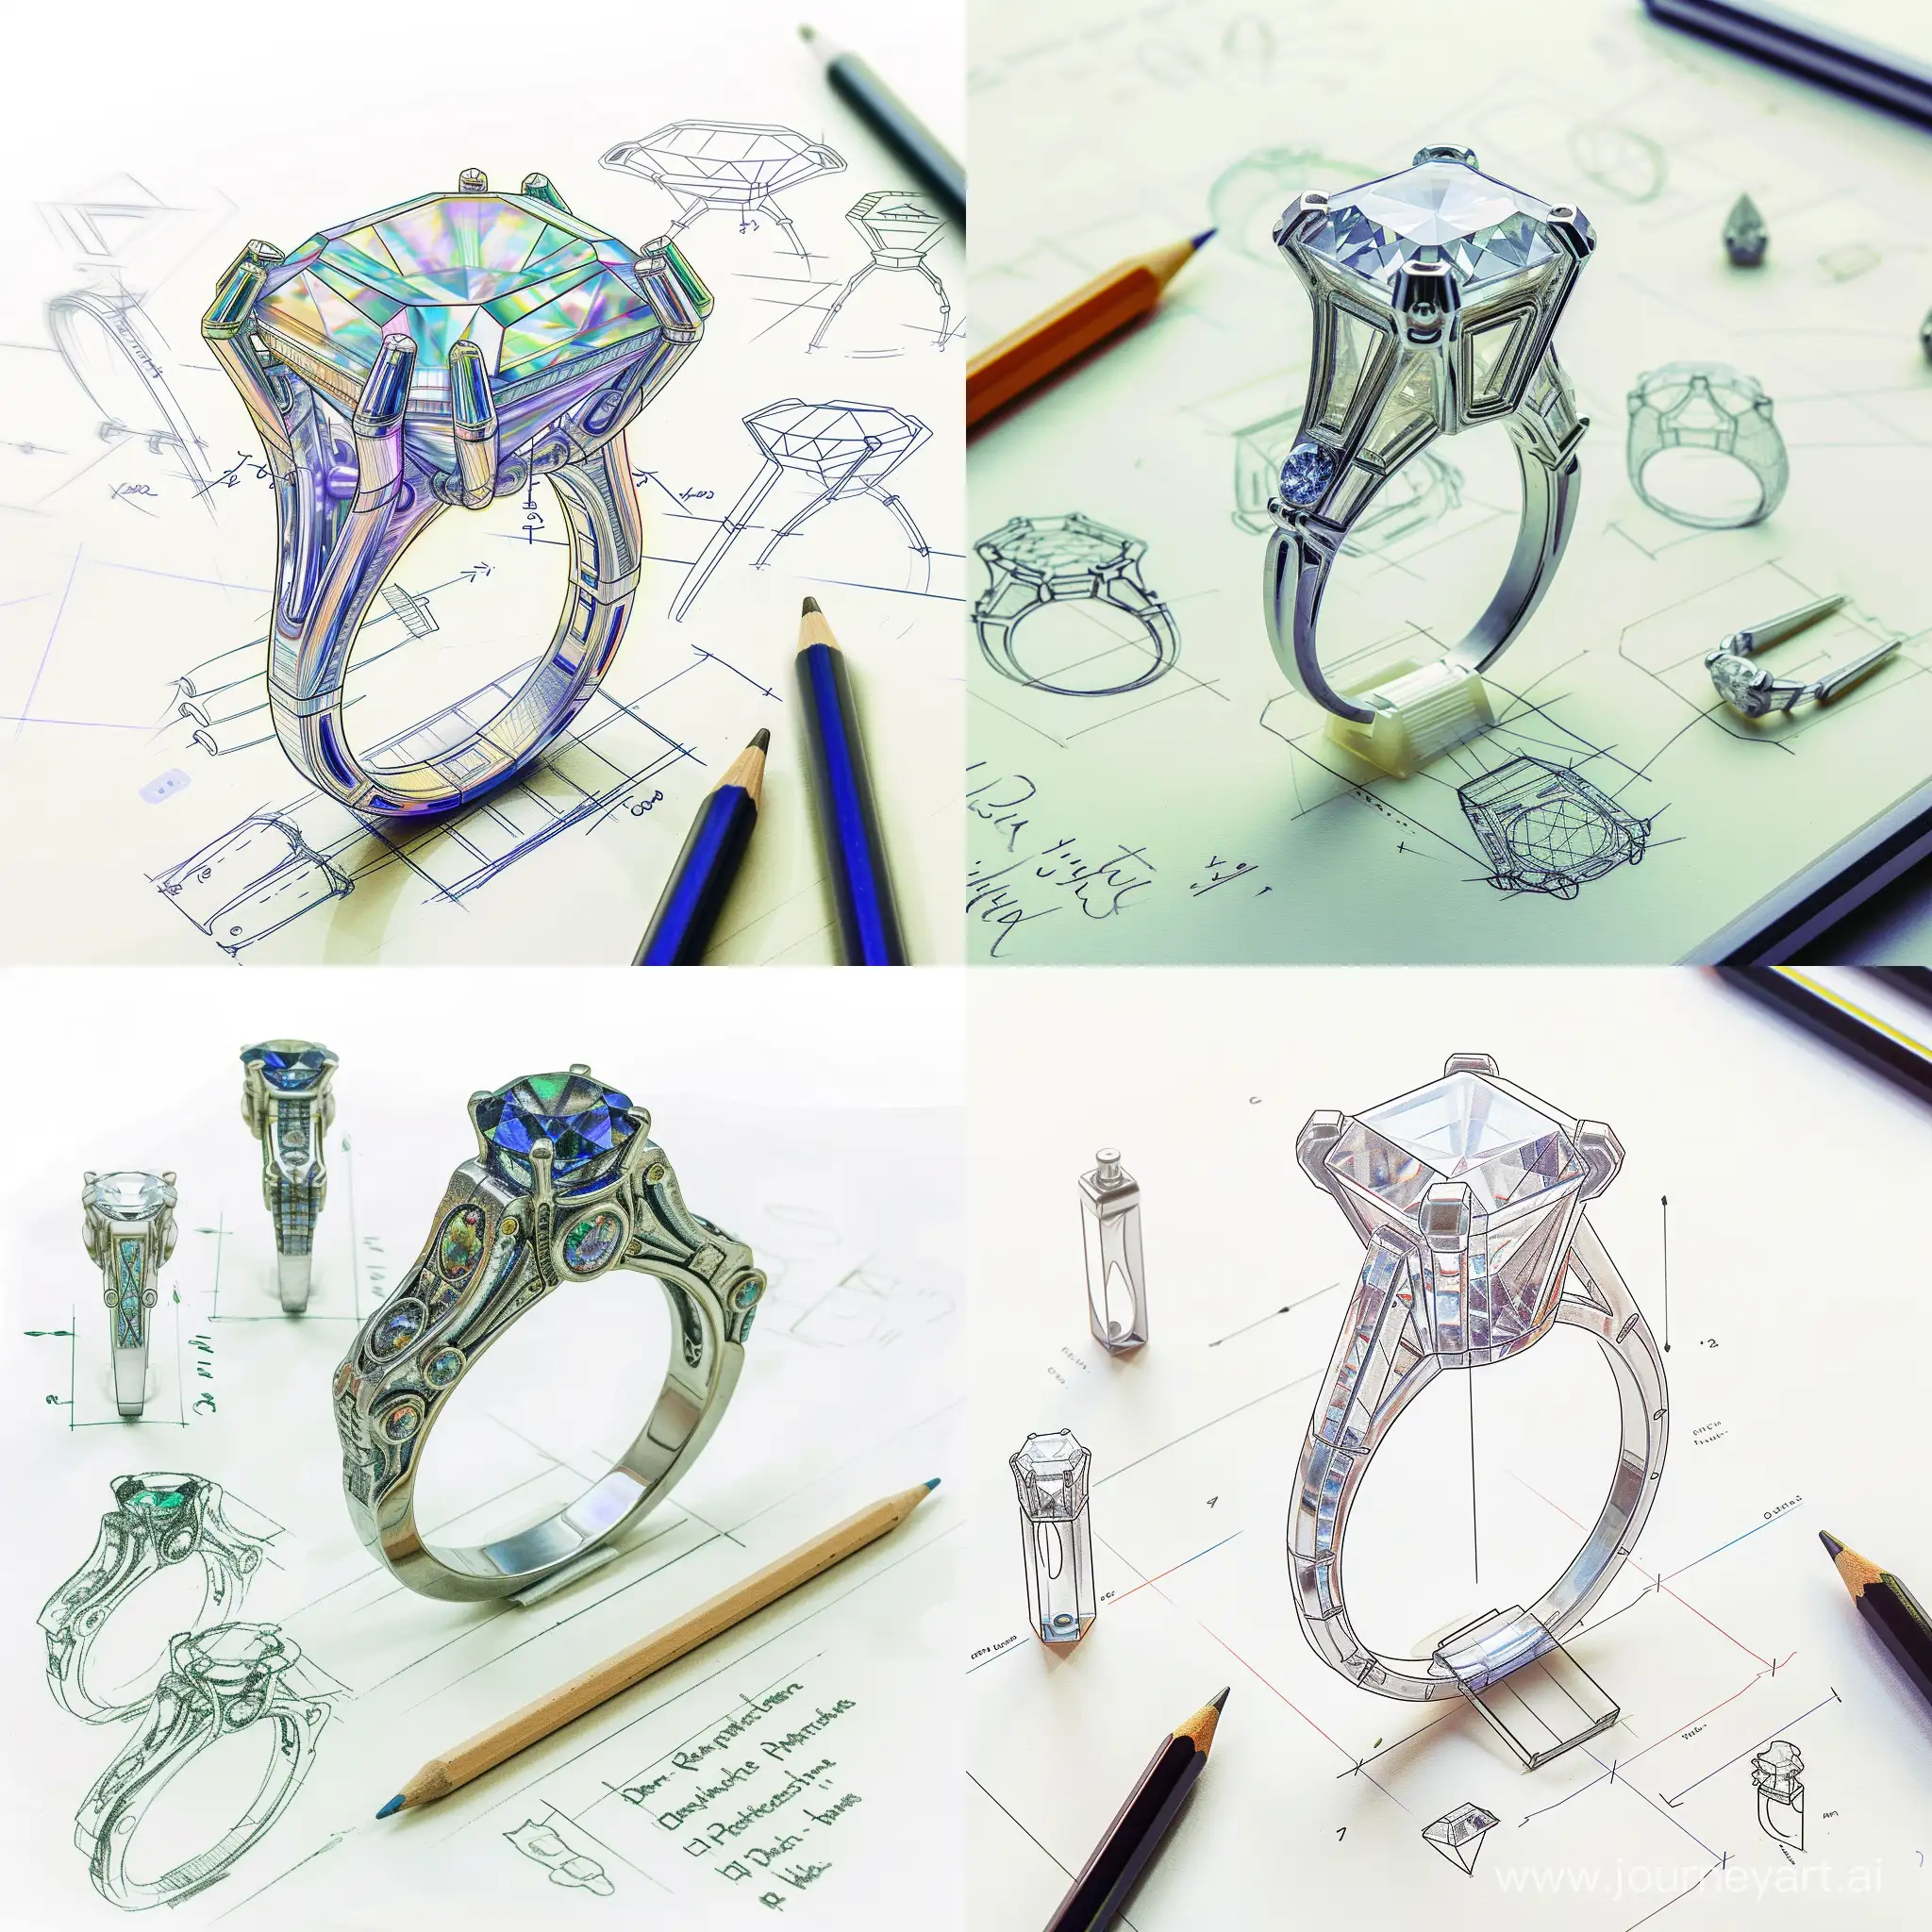 Modern-Industrial-Jewelry-Design-Sketch-with-Gemstone-Detailing